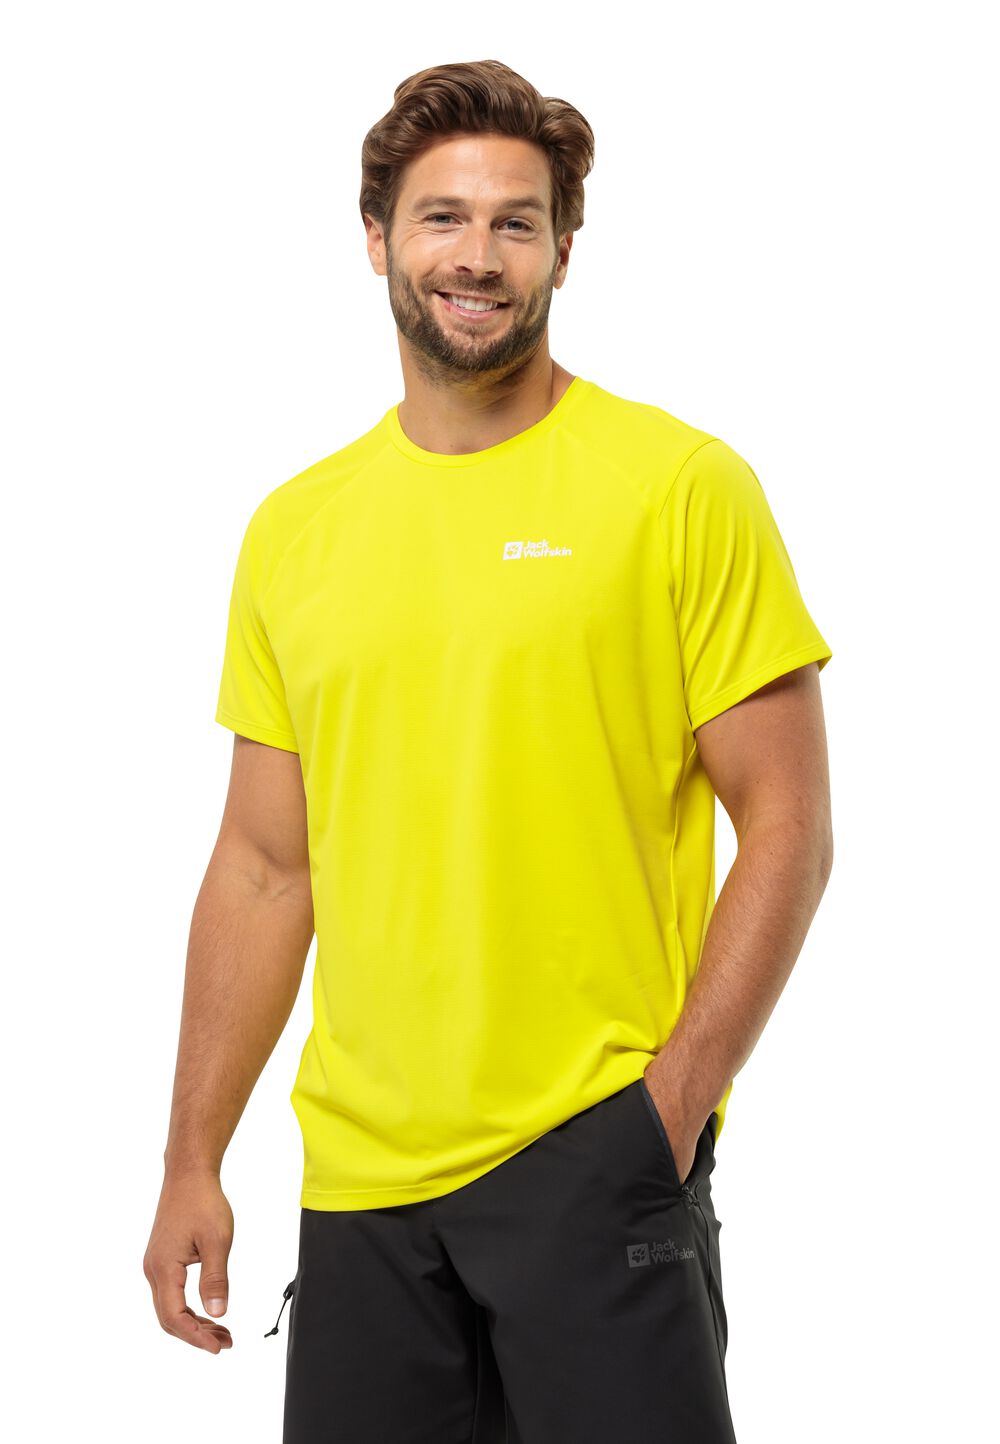 Jack Wolfskin Prelight Trail T-Shirt Men Functioneel shirt Heren L oranje firefly